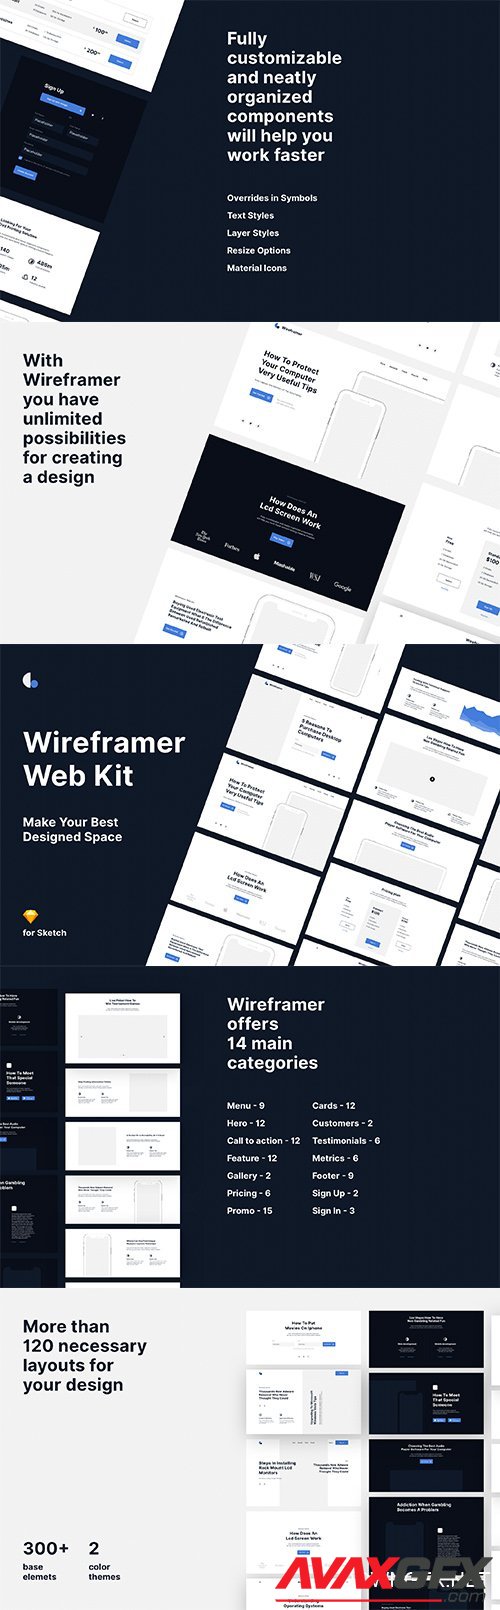 Wireframer Web Kit